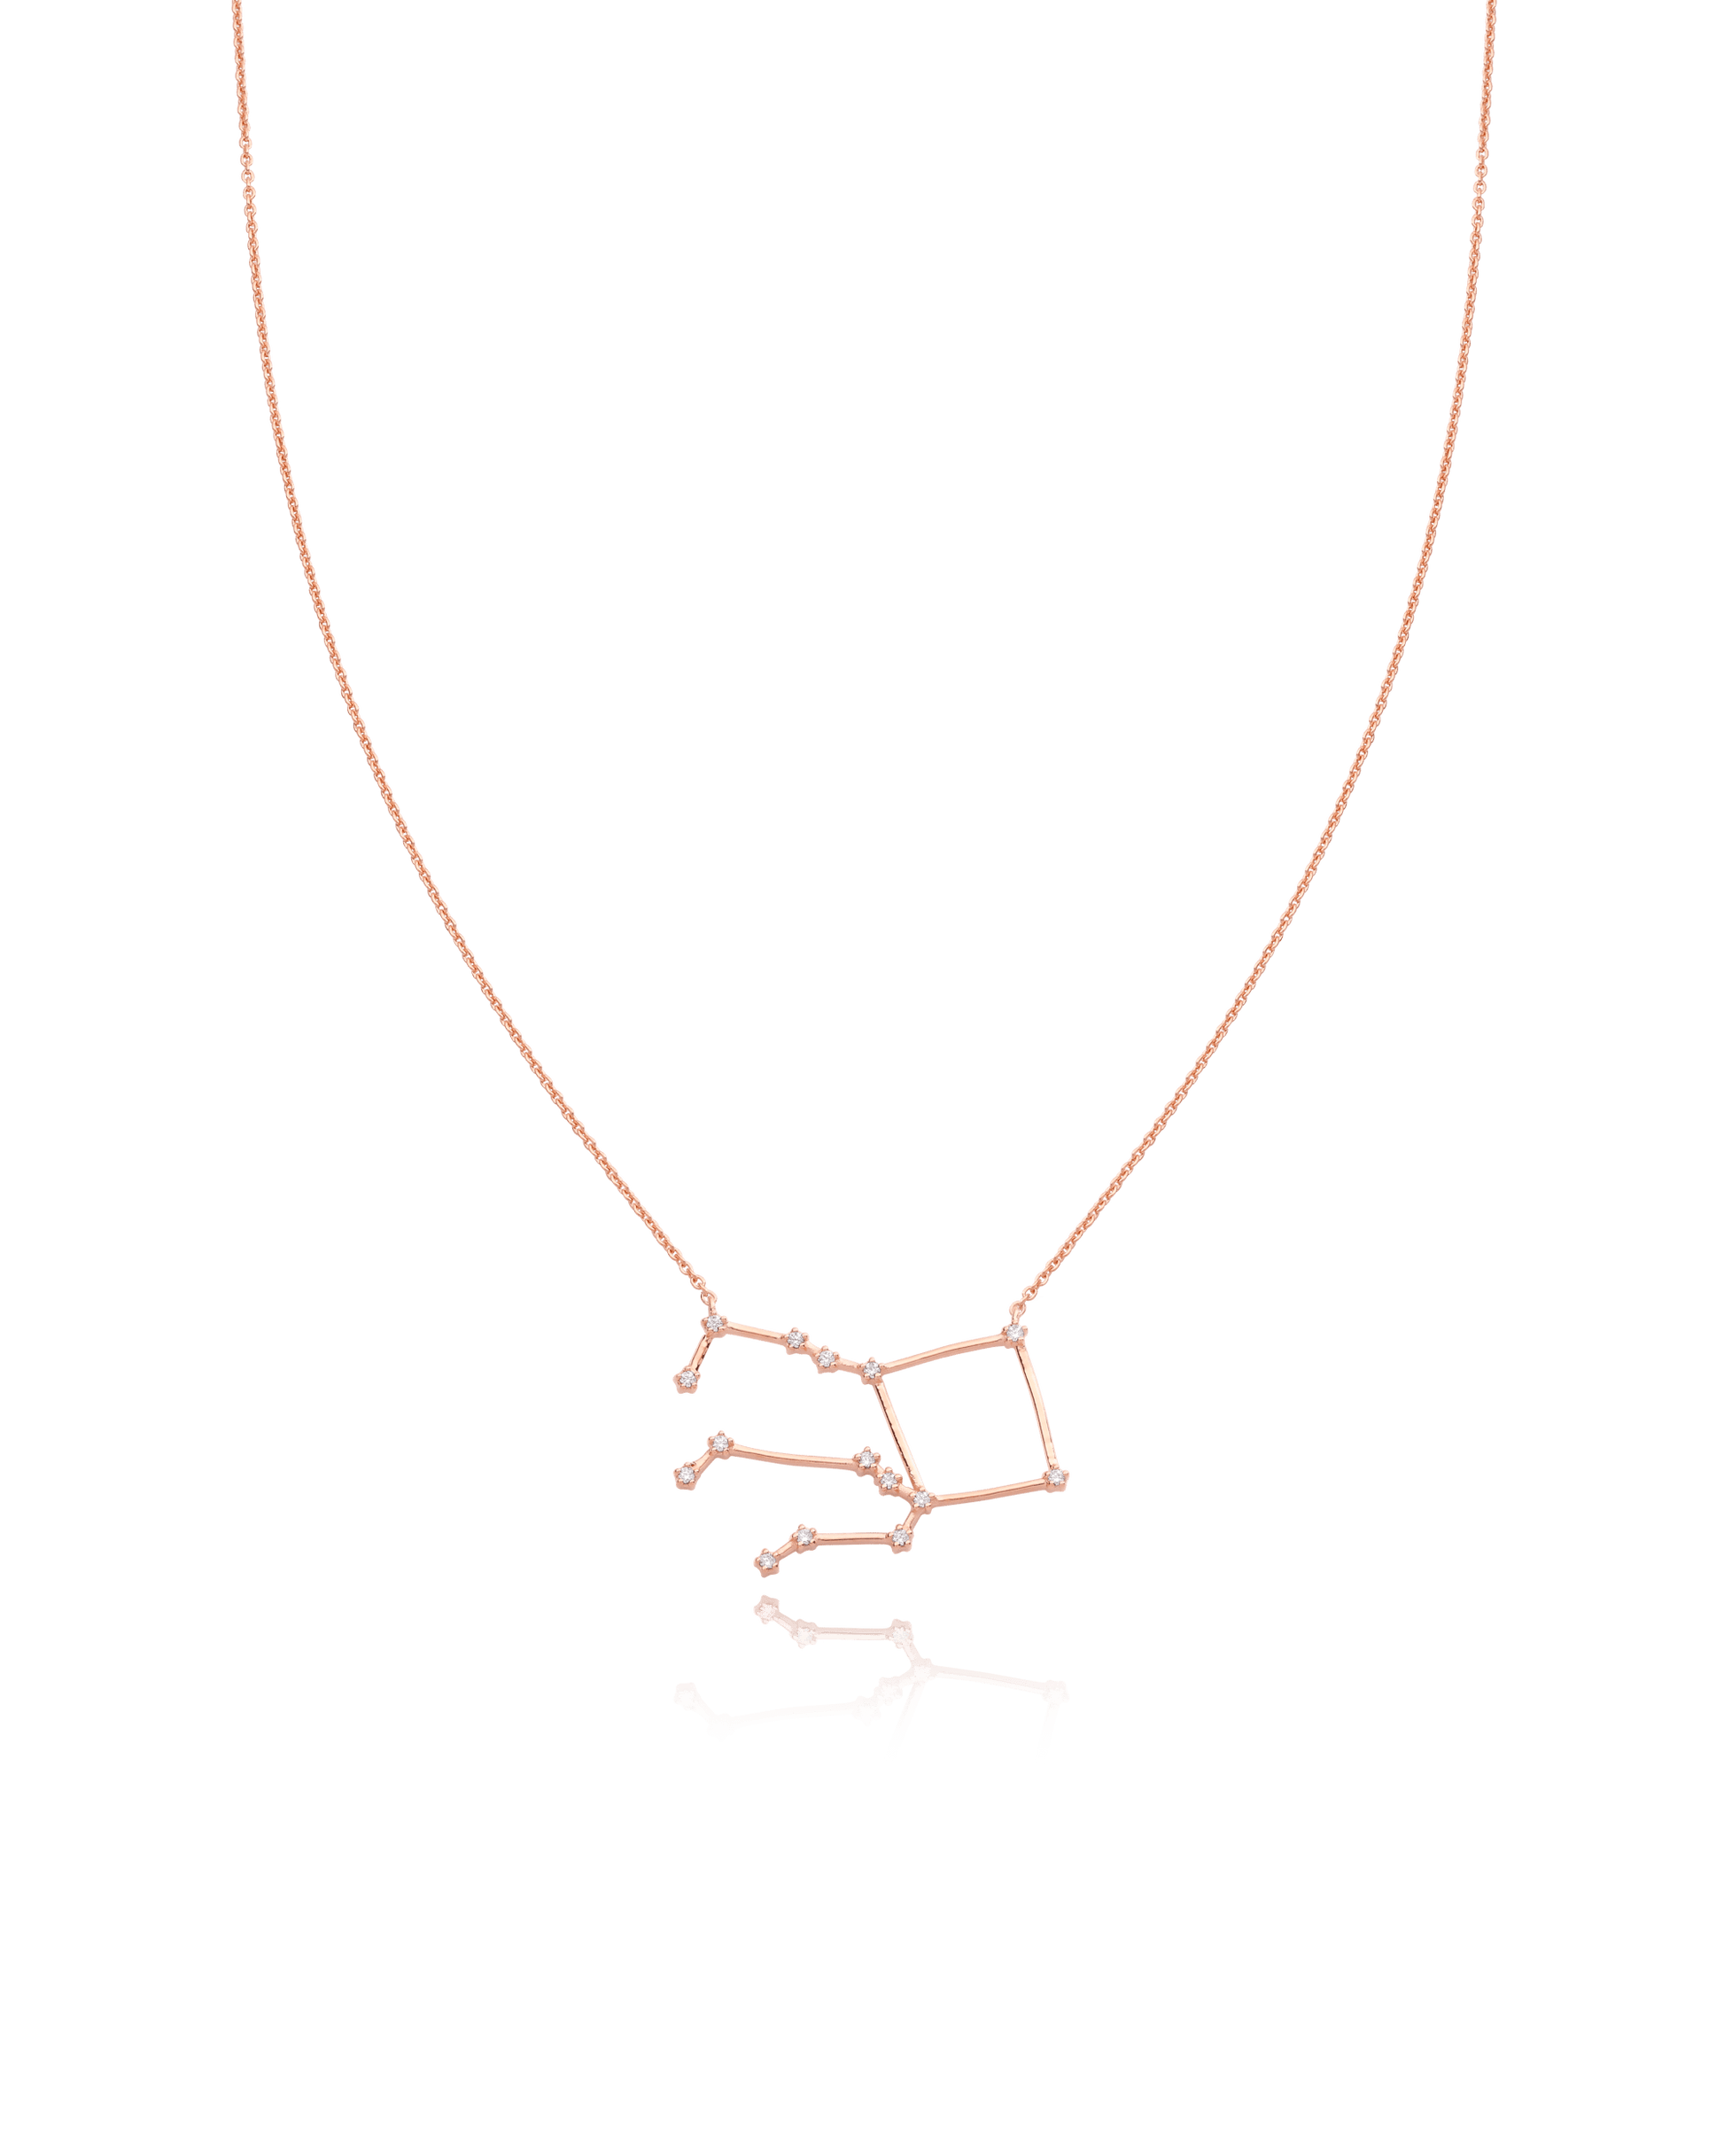 Ursa Major Constellation Necklace - 18K Rose Vermeil Necklaces magal-dev Pegasus 16" 